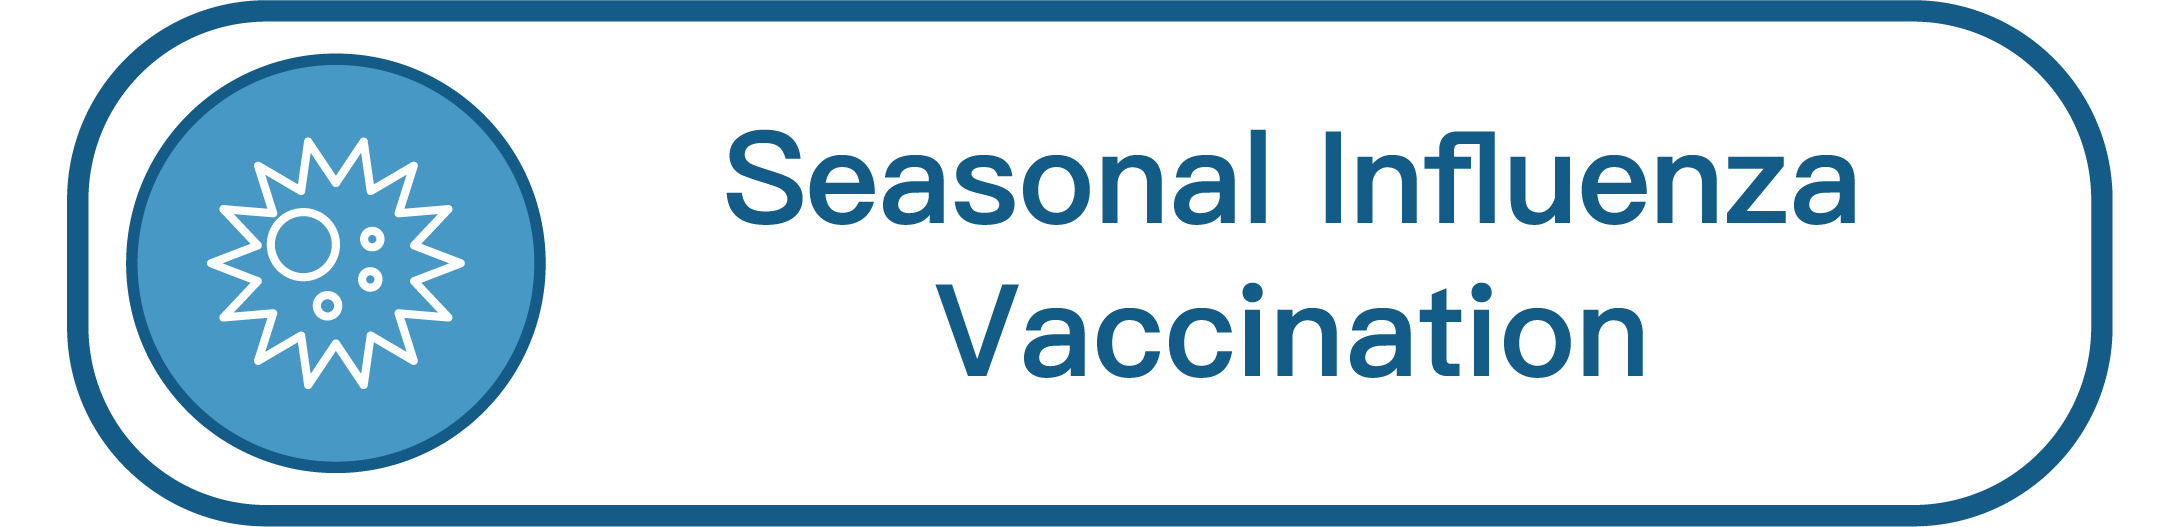 Seasonal Influenza Vaccination